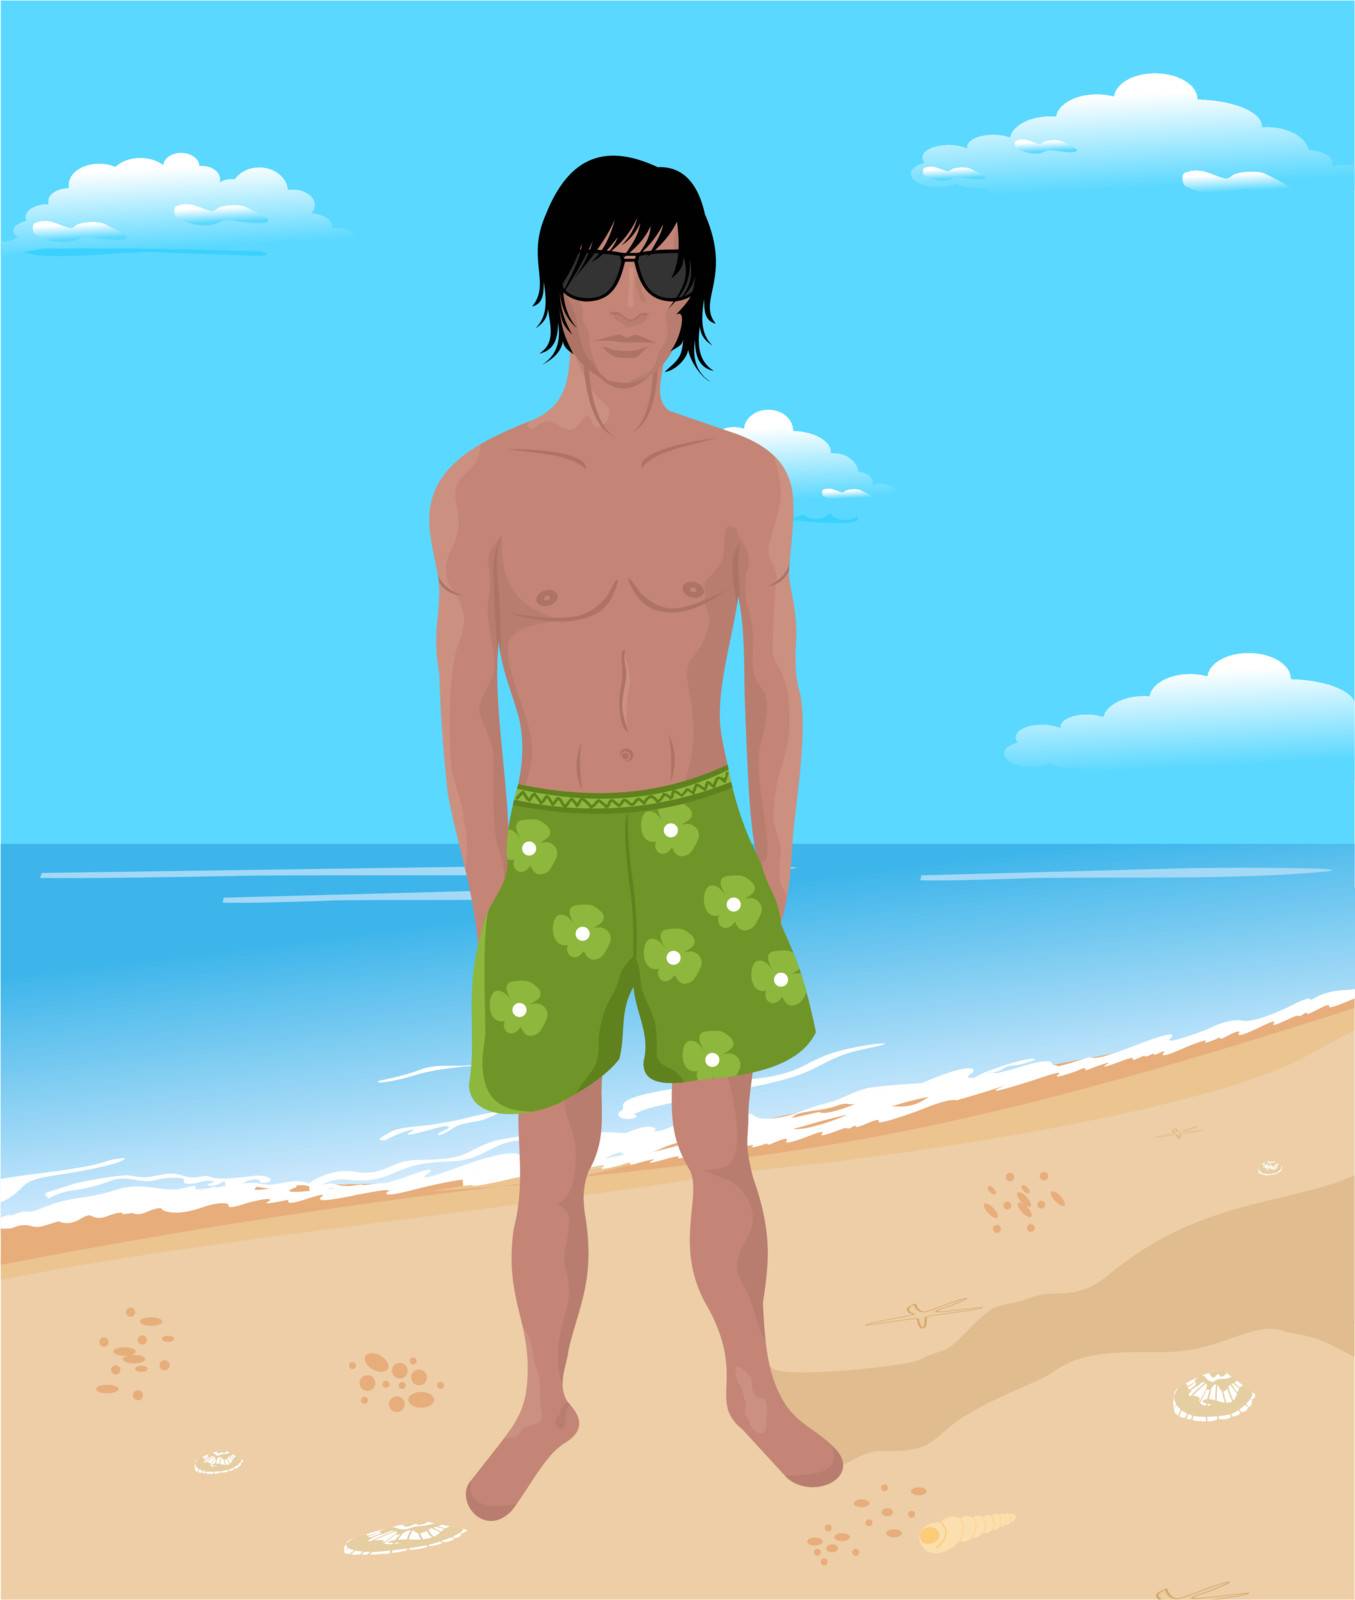 brawny man on beach by smeagorl